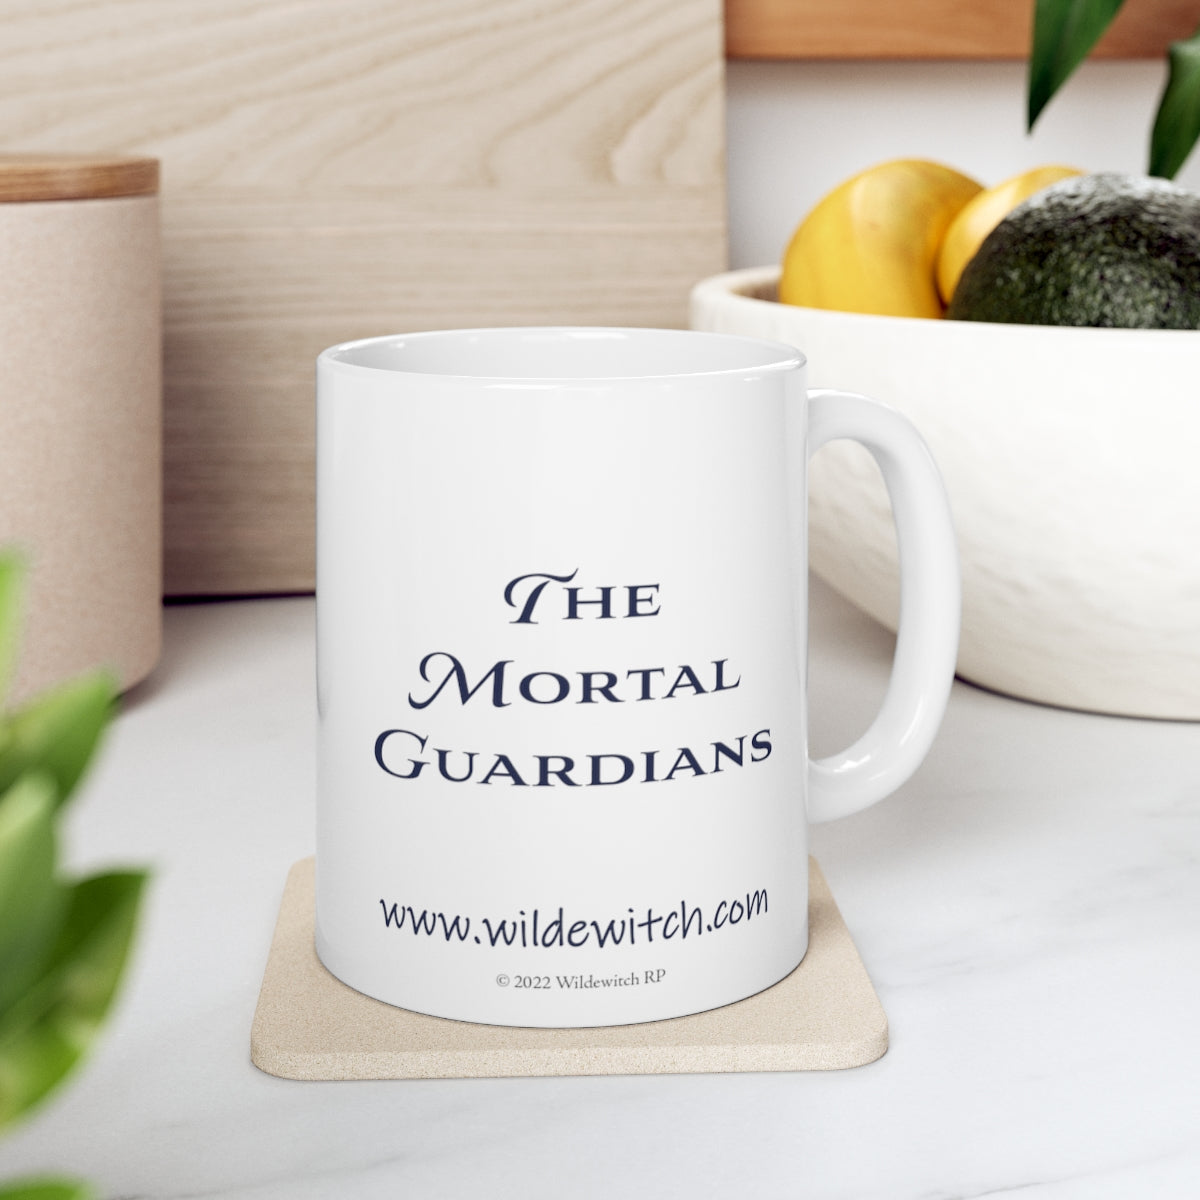 The Mortal Guardians Ceramic Mug 11oz